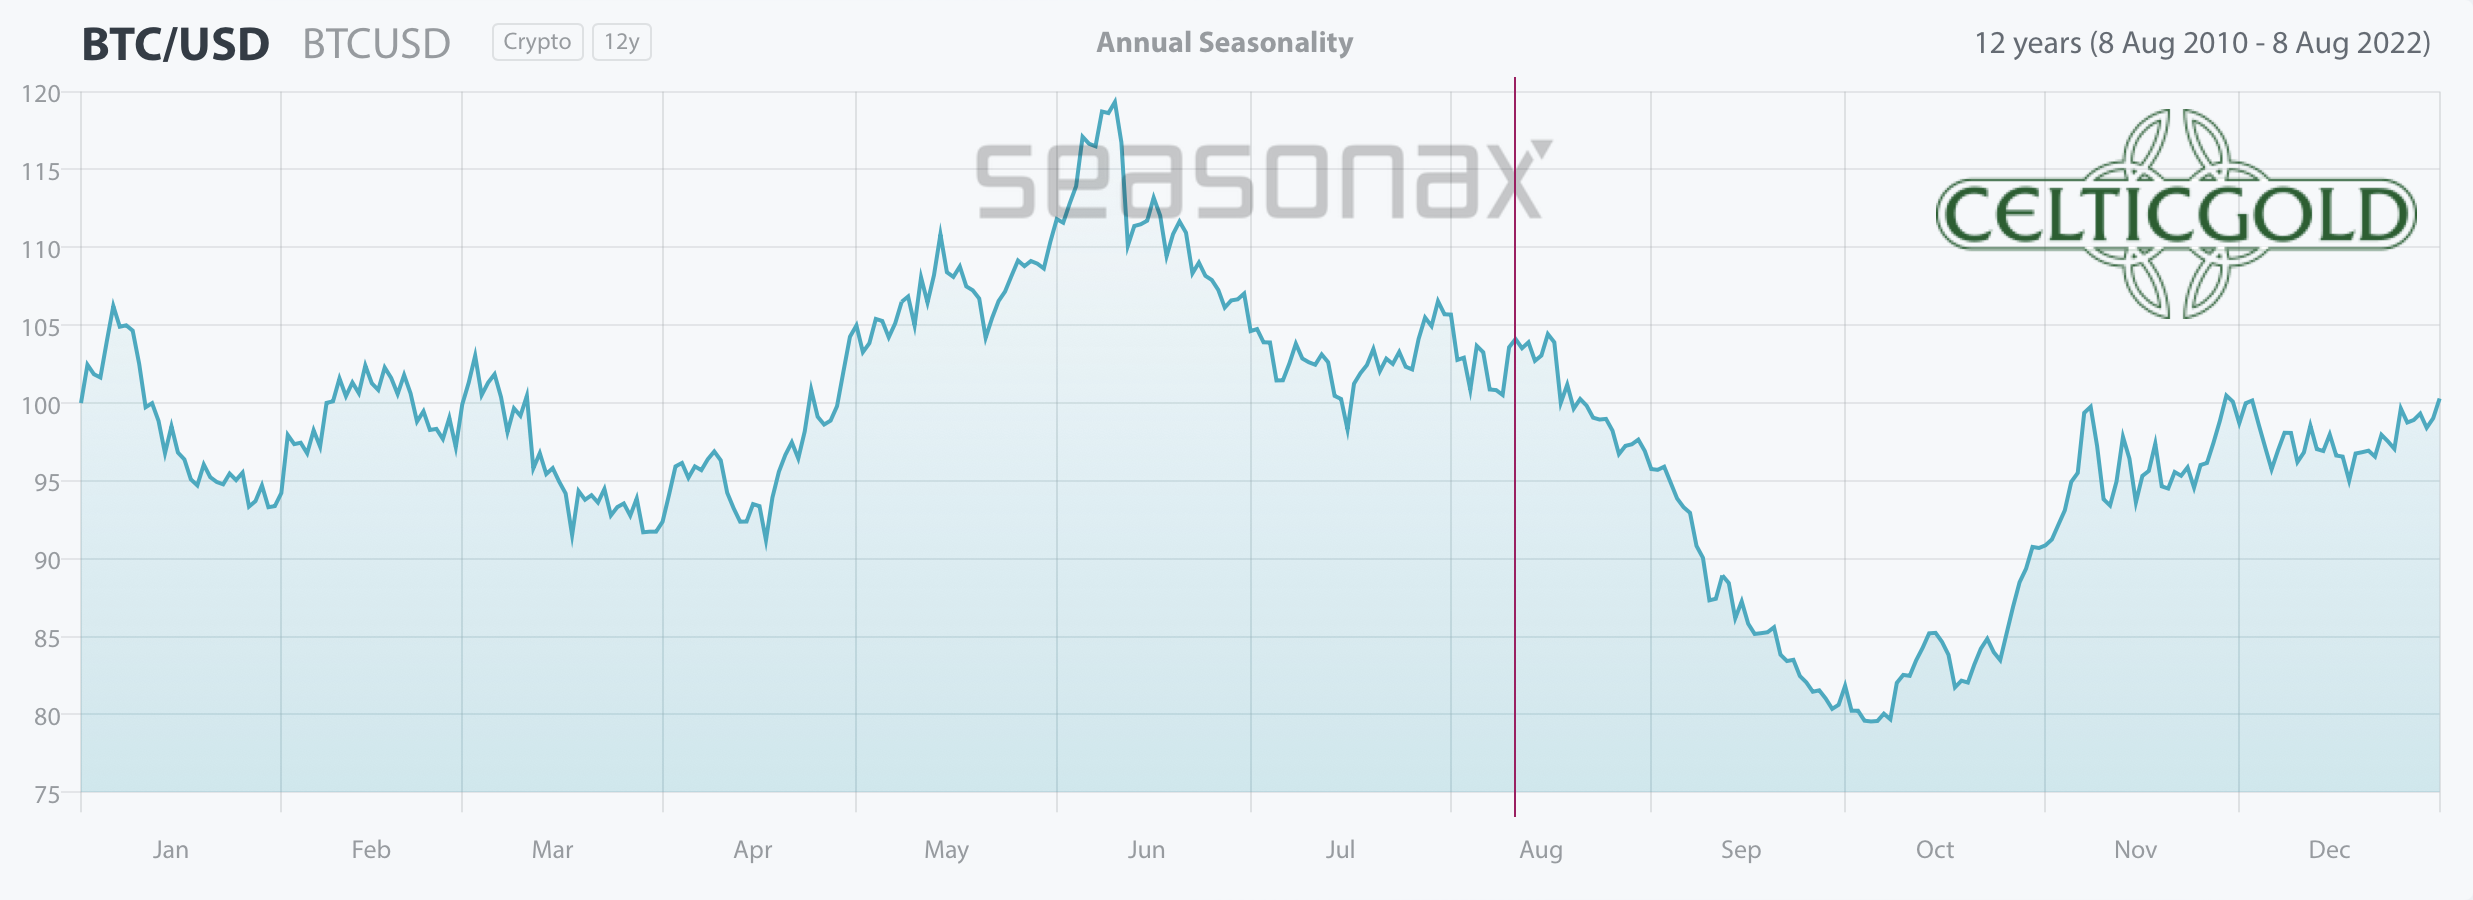 Seasonality for bitcoin, as of August 11th, 2022. Source: Seasonax